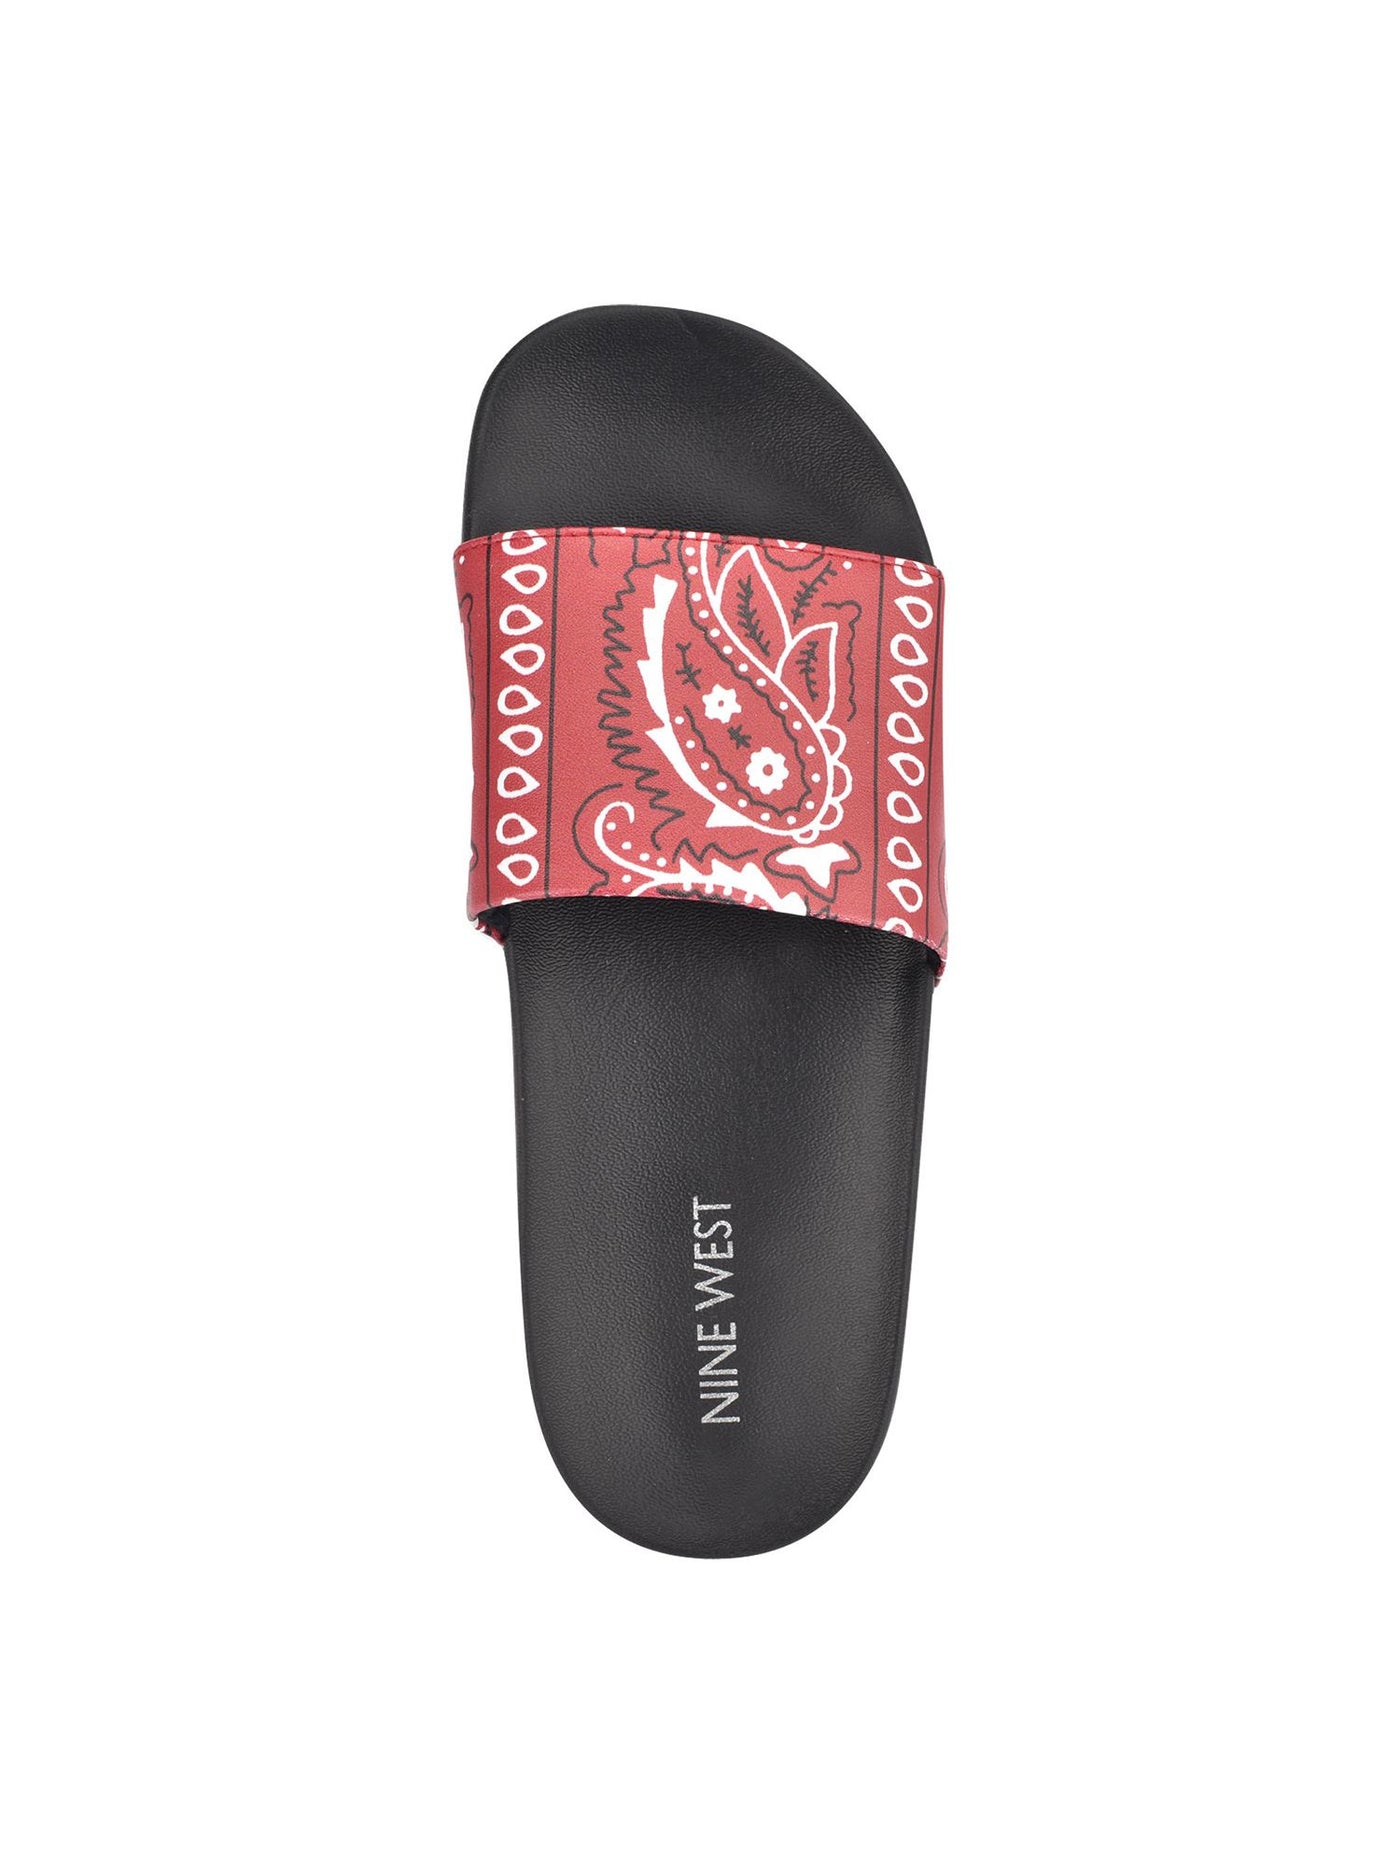 NINE WEST Womens Red Gradient Iridescent Comfort Sandbar Round Toe Wedge Slip On Slide Sandals 8 M